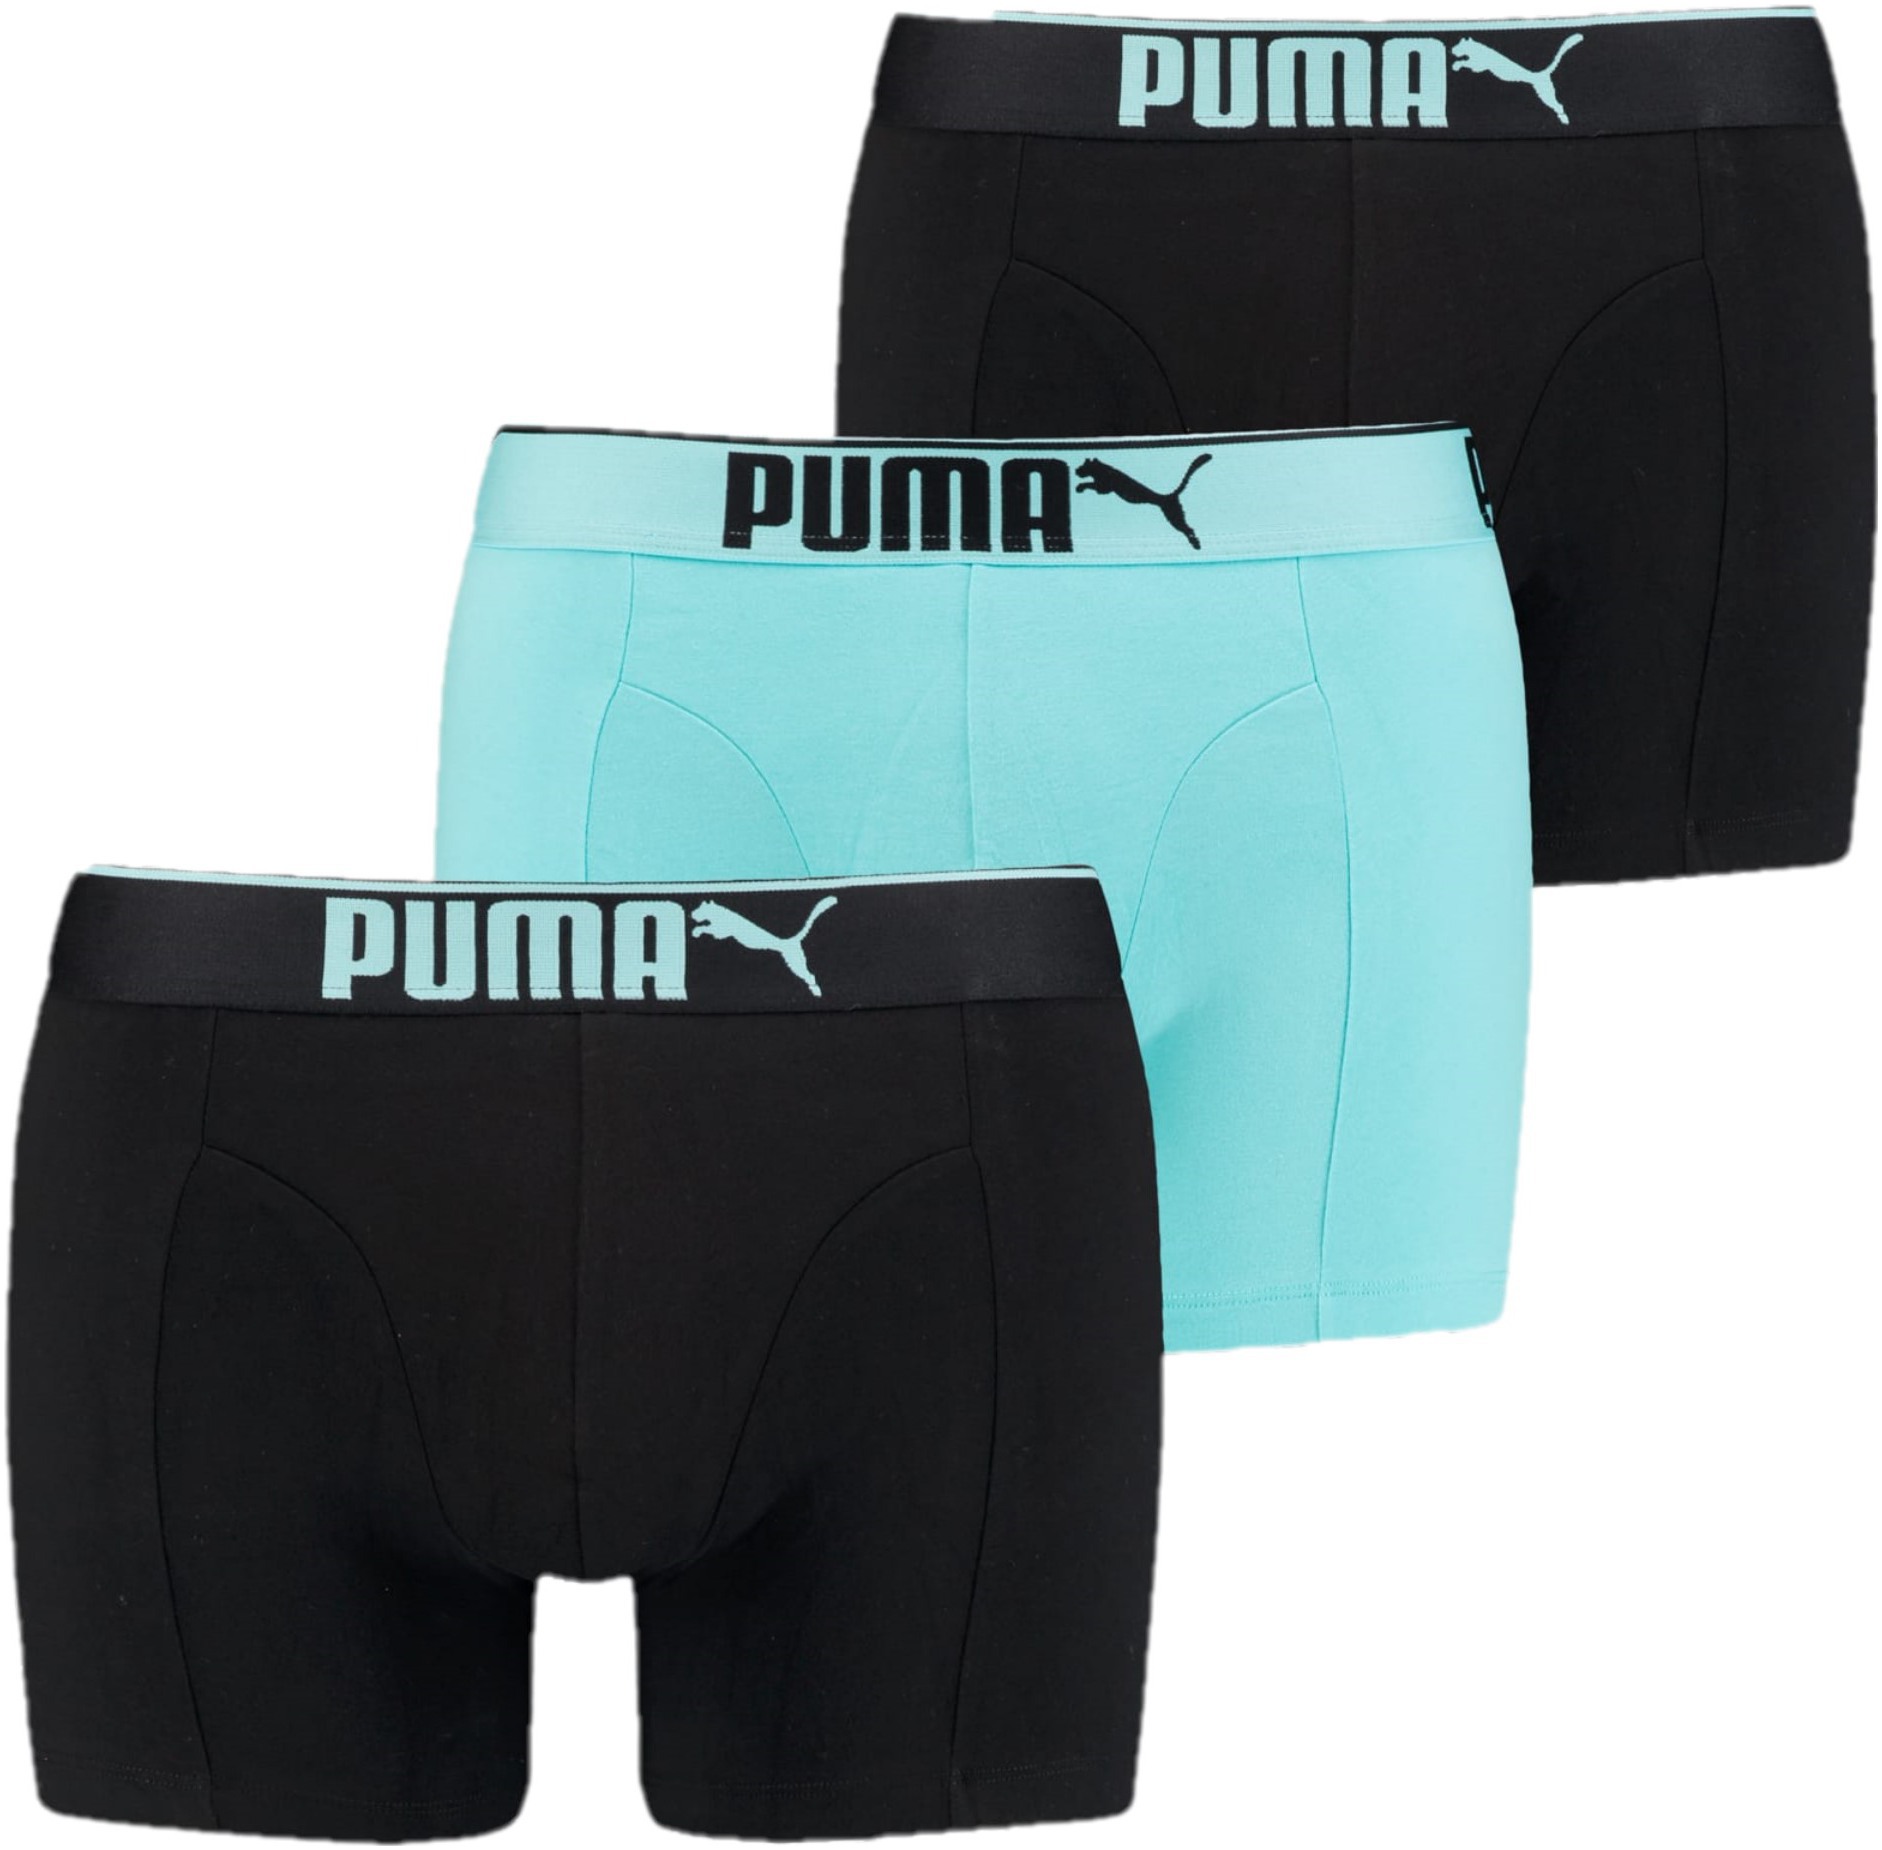 Mens boxers Puma PREMIUM SUEDED COTTON BOXER 3P blue | AD Sport.store